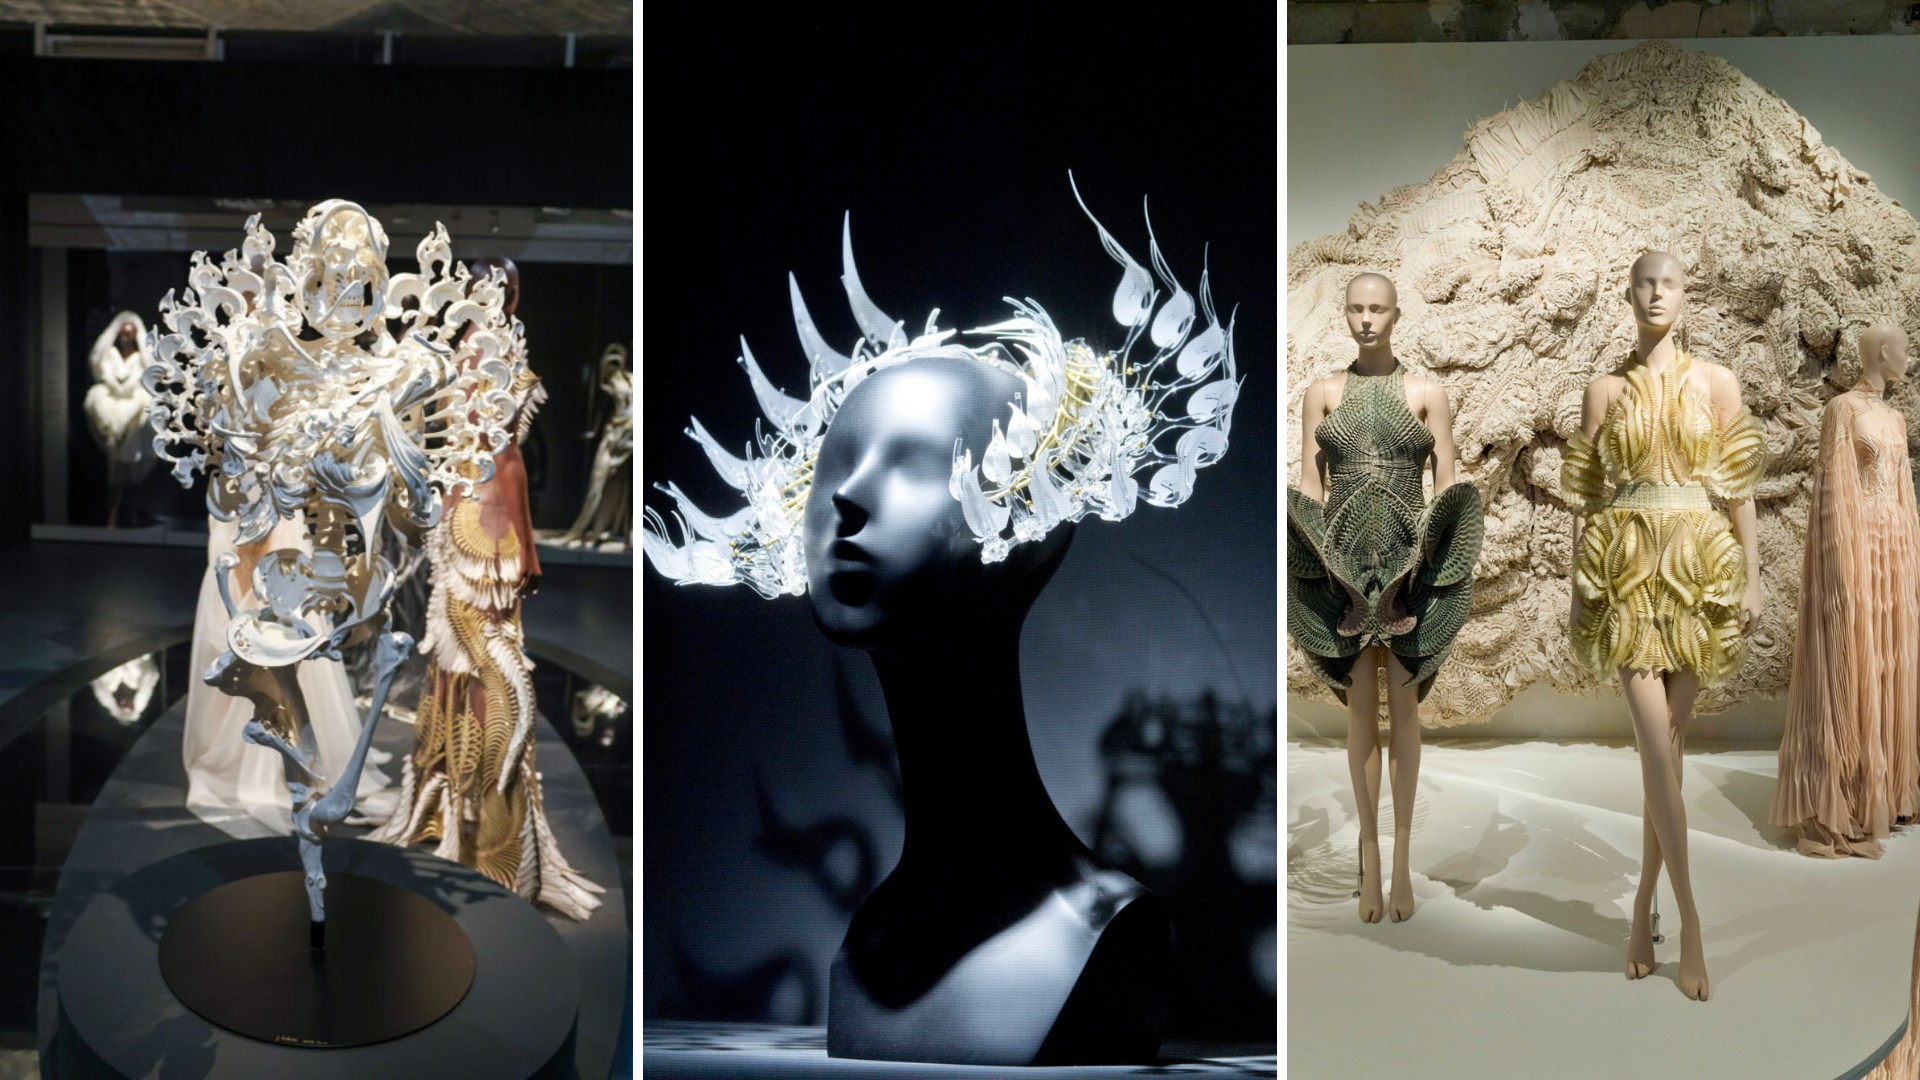 Triển lãm “Iris van Herpen: Sculpting the Senses” ở bảo tàng Pháp